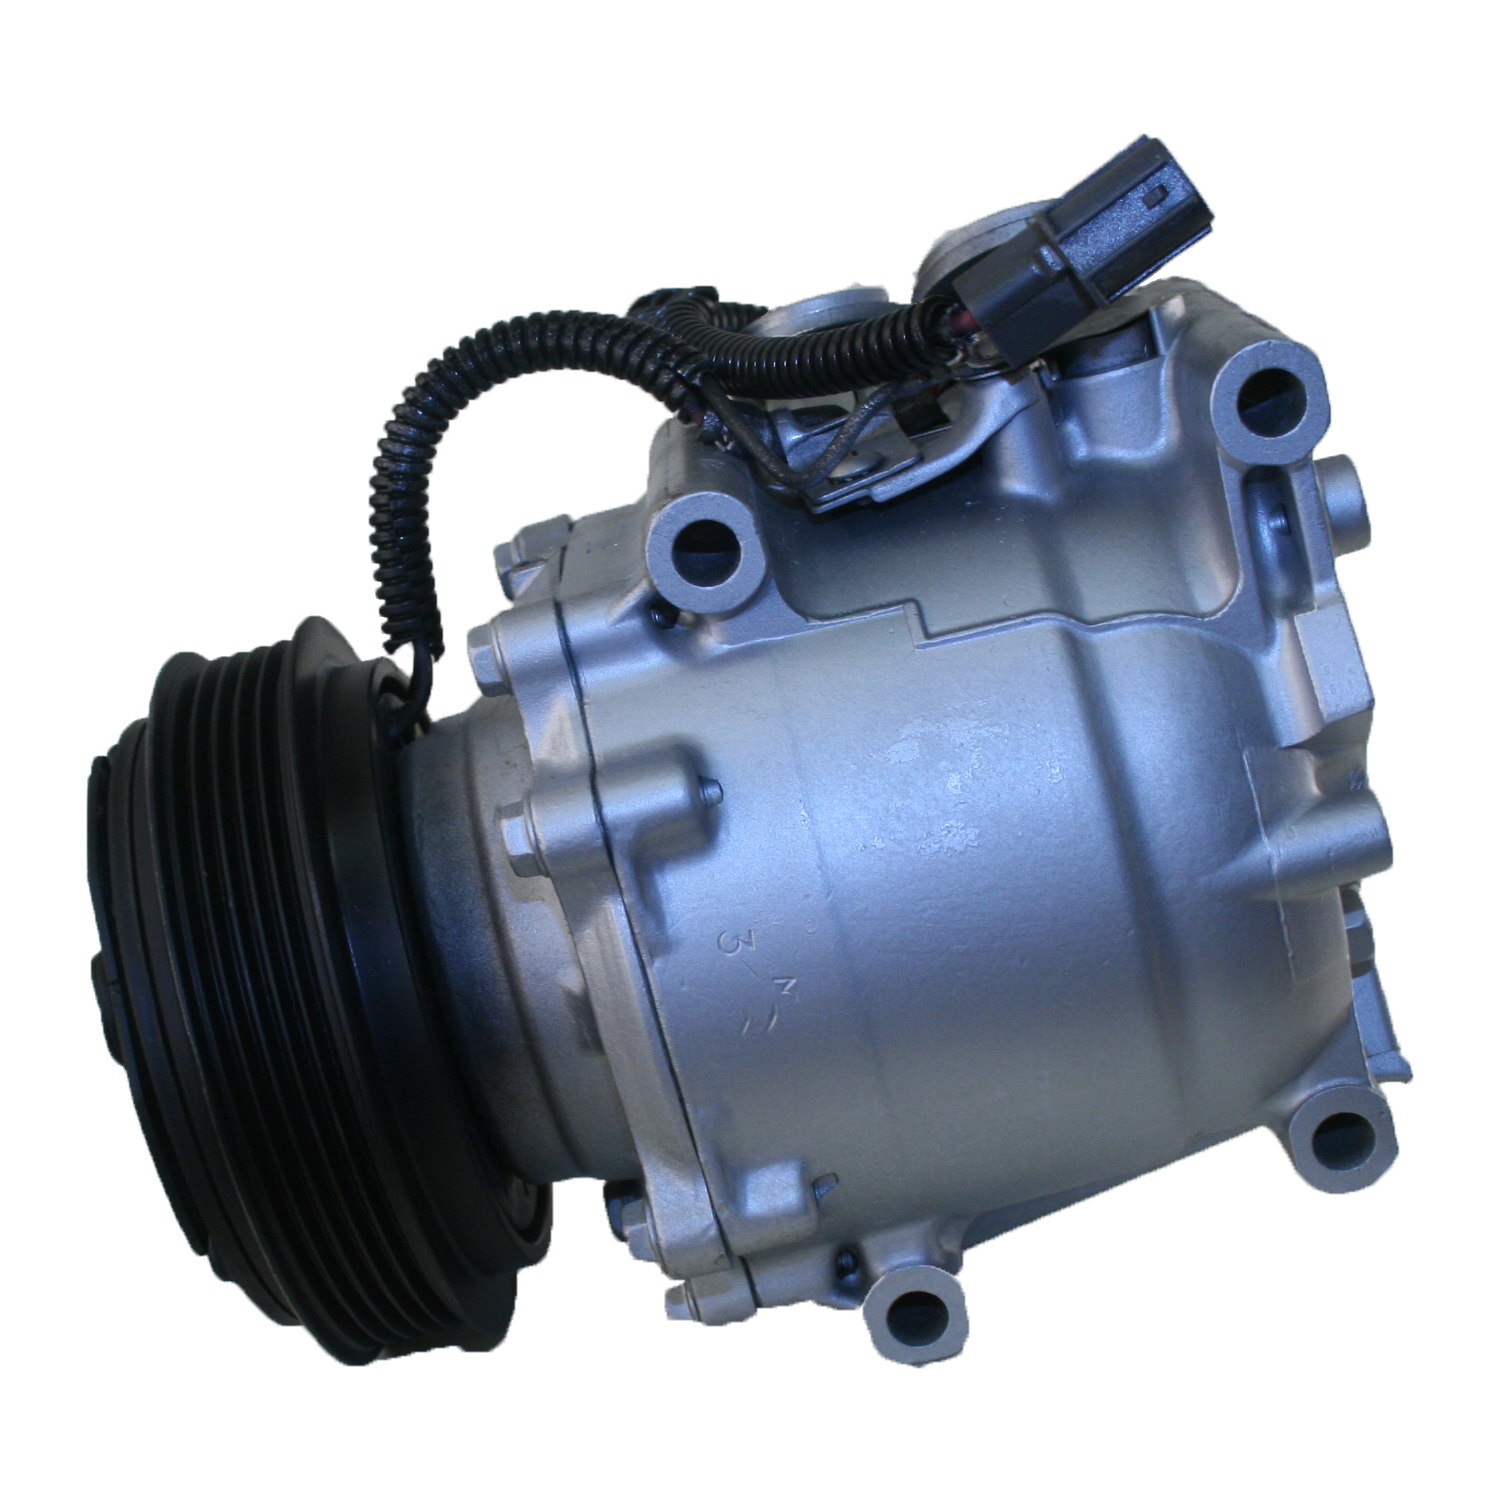 TCW Compressor 40842.501 Remanufactured